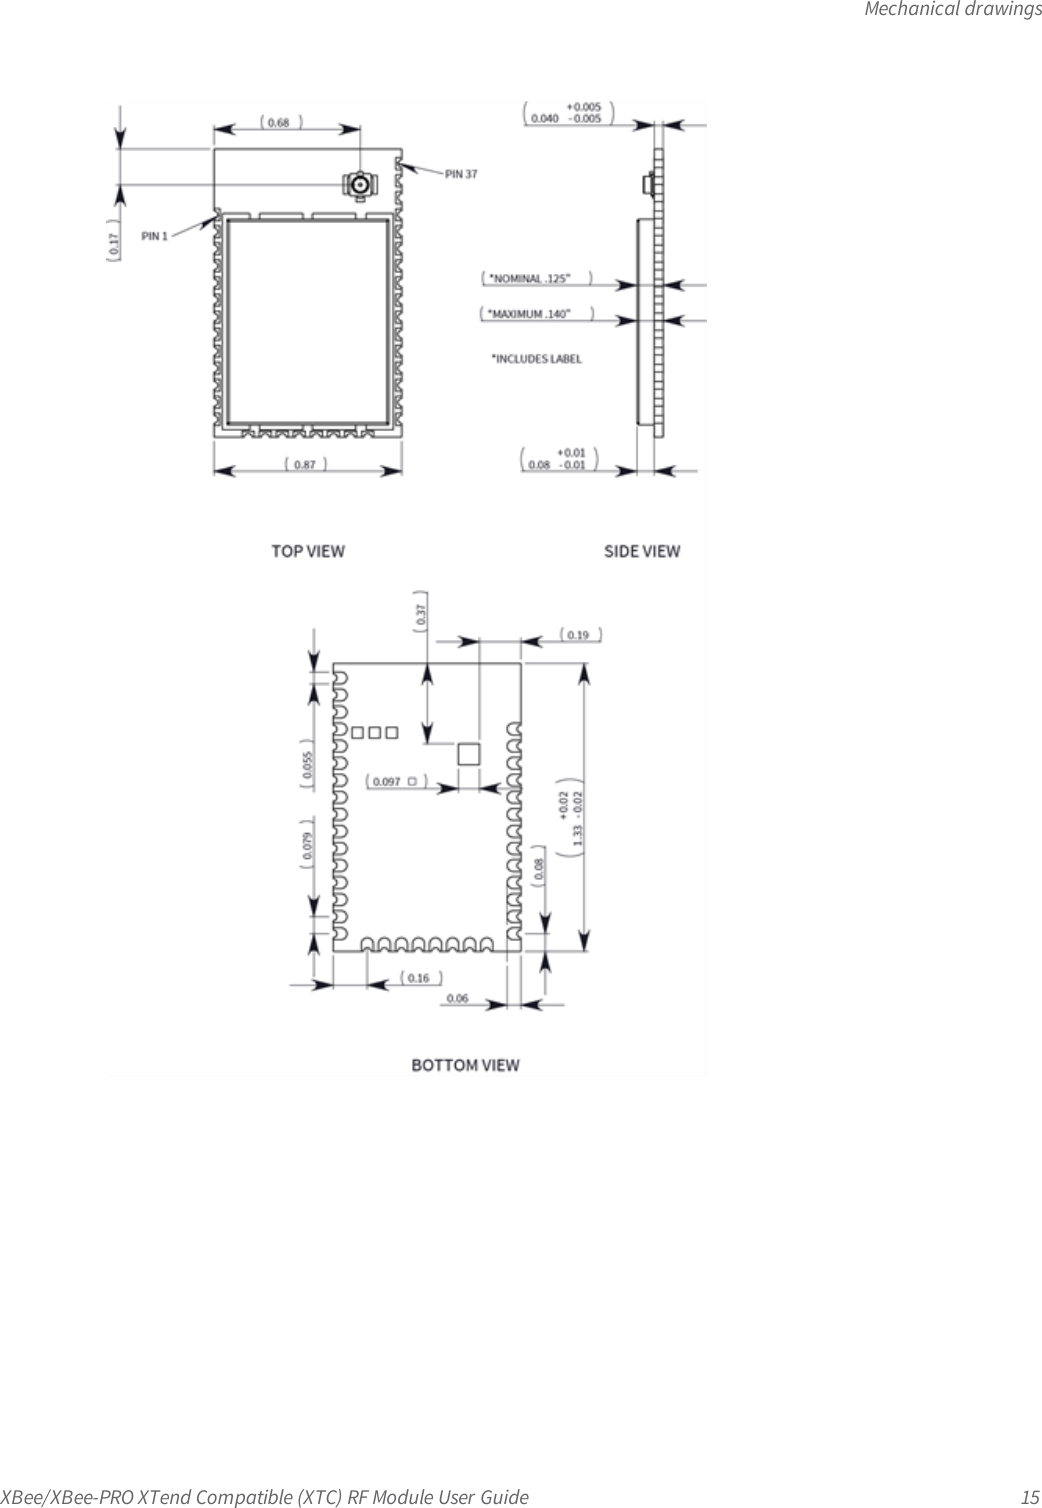 Mechanical drawingsXBee/XBee-PRO XTend Compatible (XTC) RF Module User Guide 15